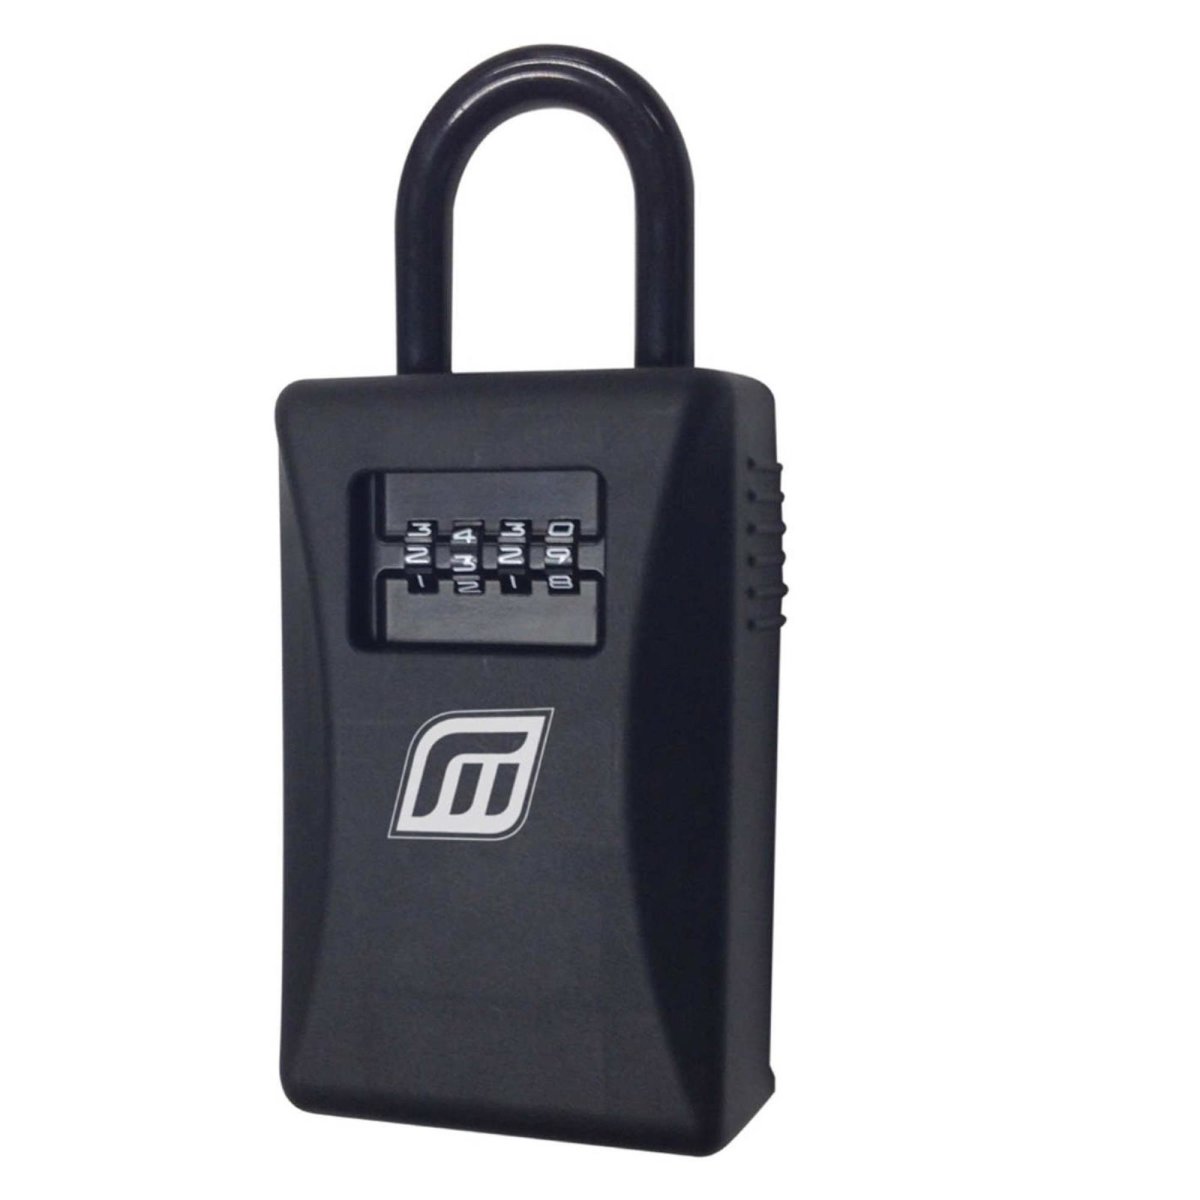 https://santoloco.com/media/image/product/52229/lg/madness-schluesselbox-keylock-key-safe-box-tresor.jpg